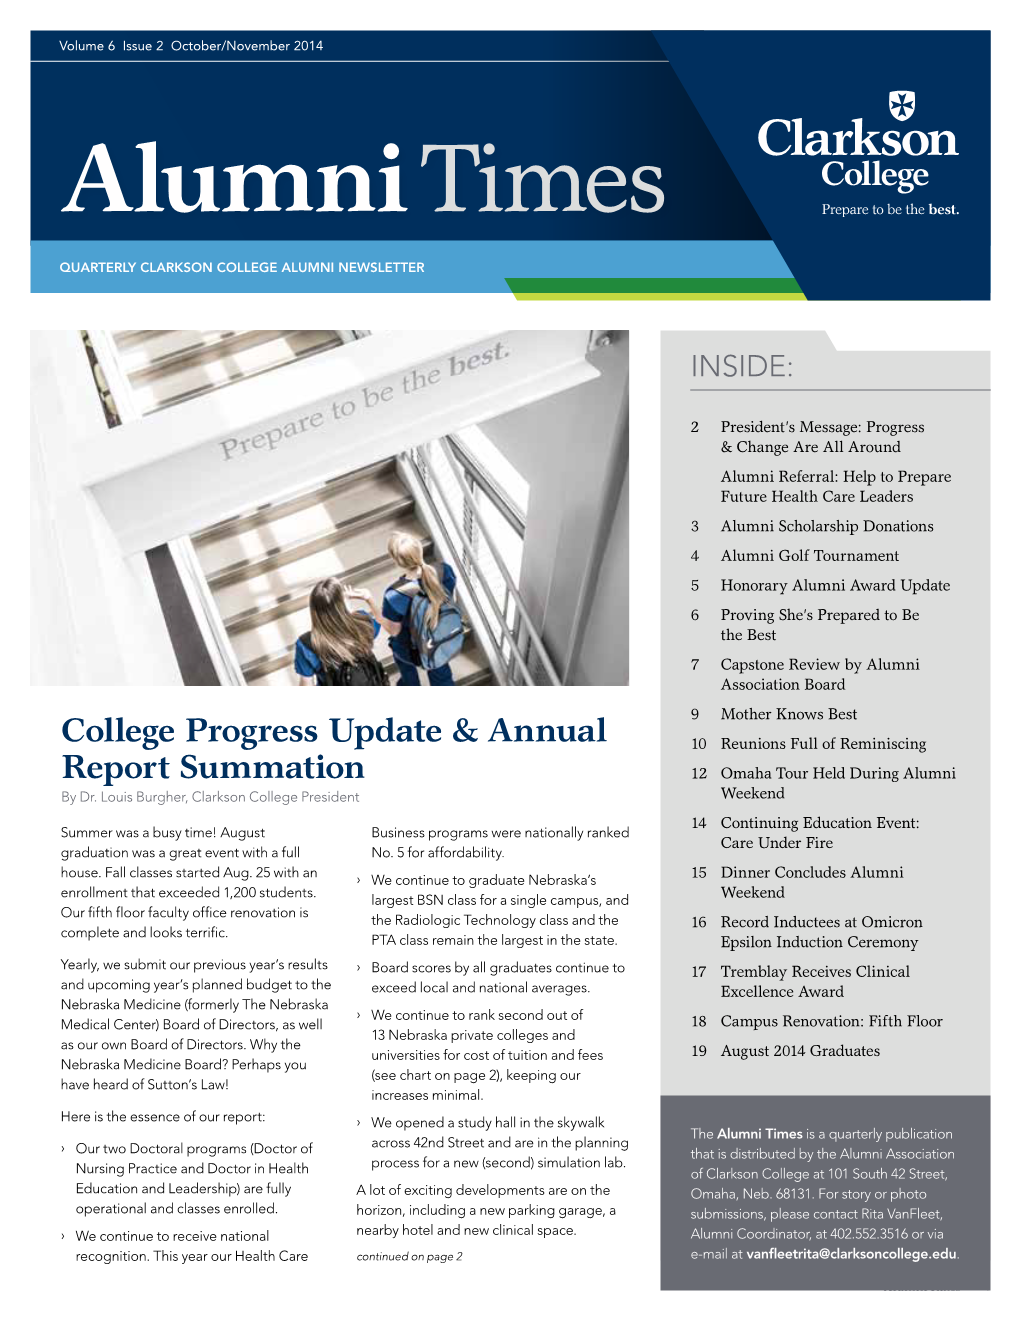 Alumni Times